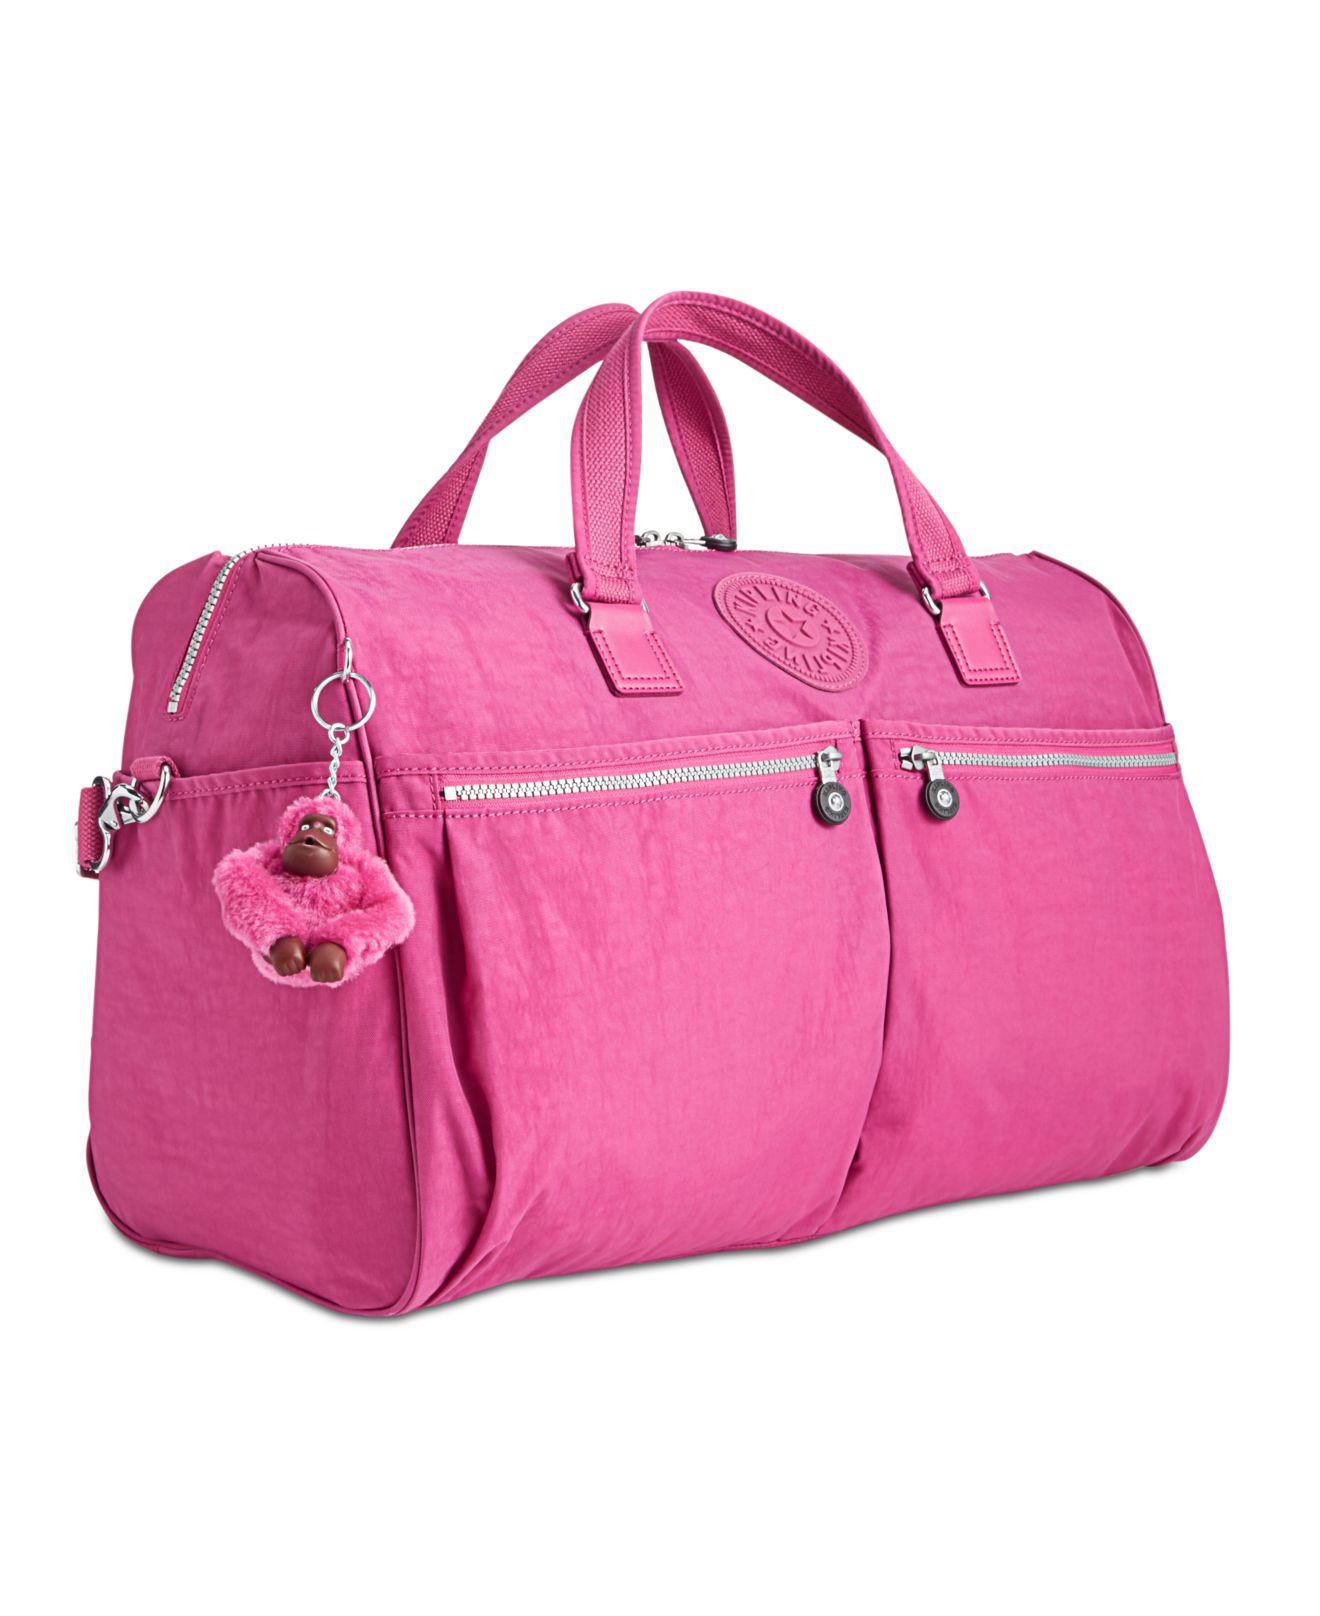 Kipling Synthetic Itska Extra-large Duffle Bag in Pink | Lyst